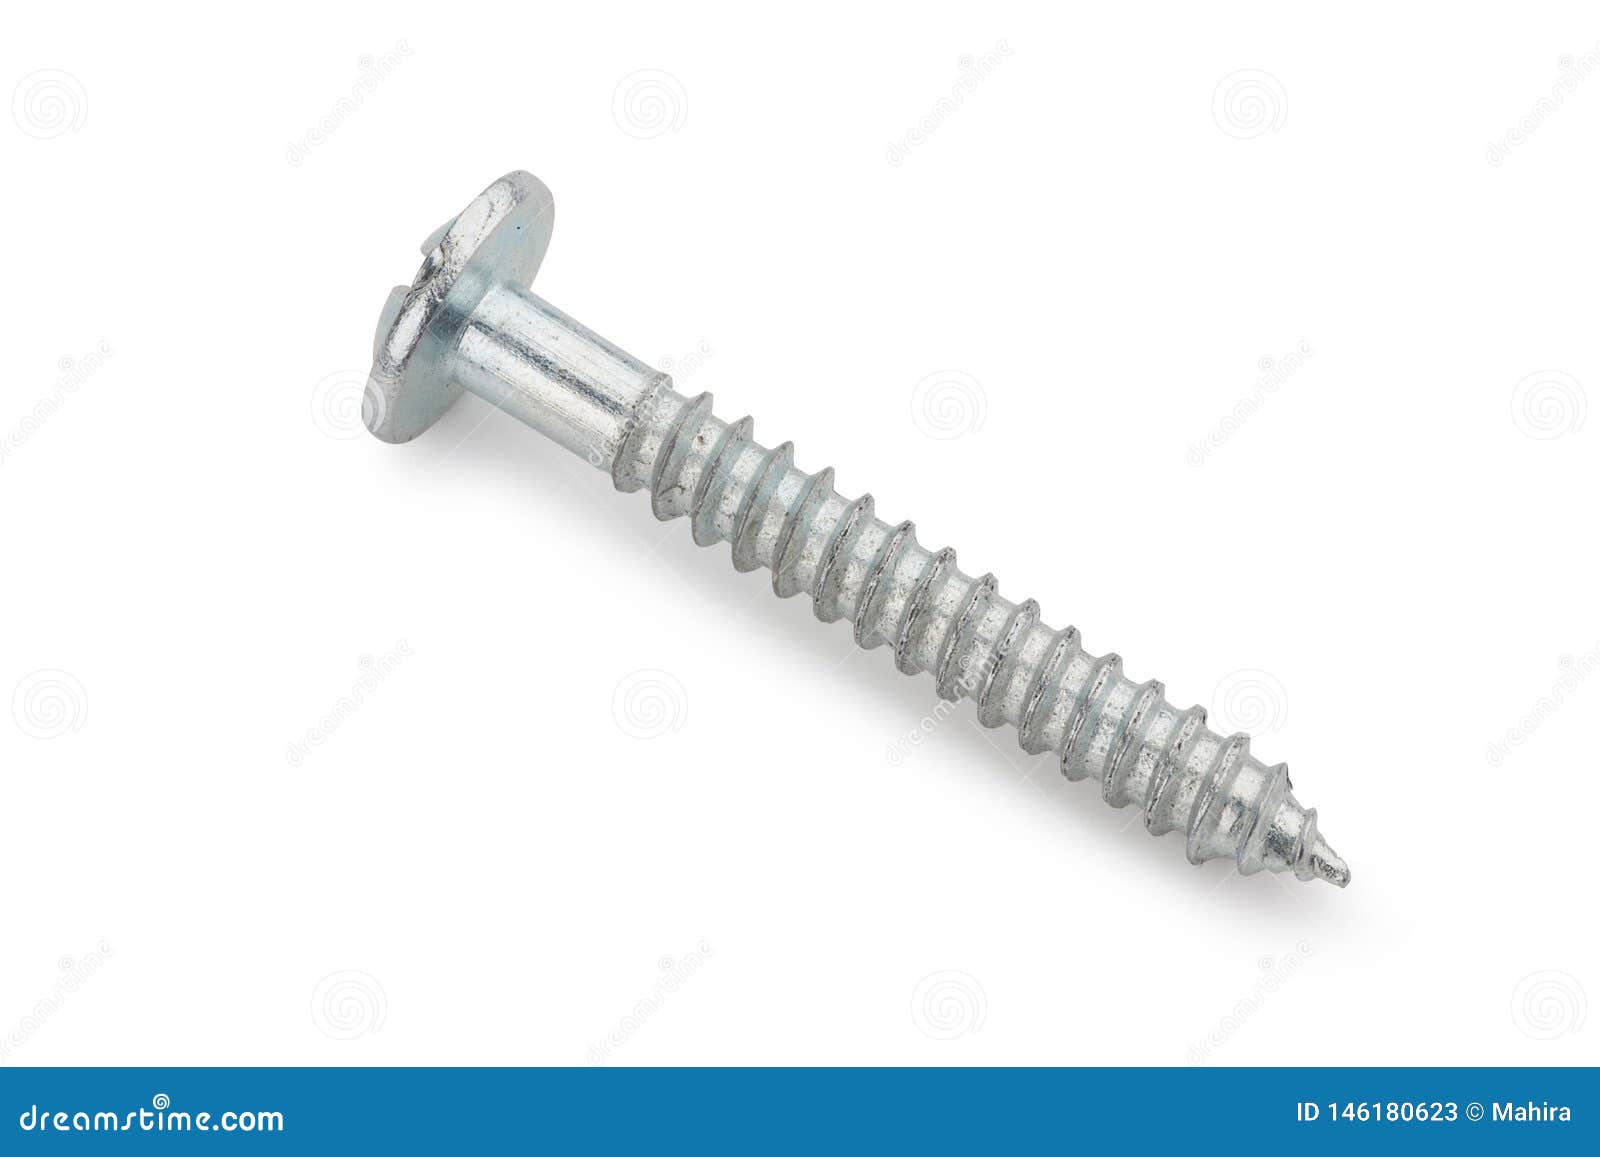 steel screw  on white